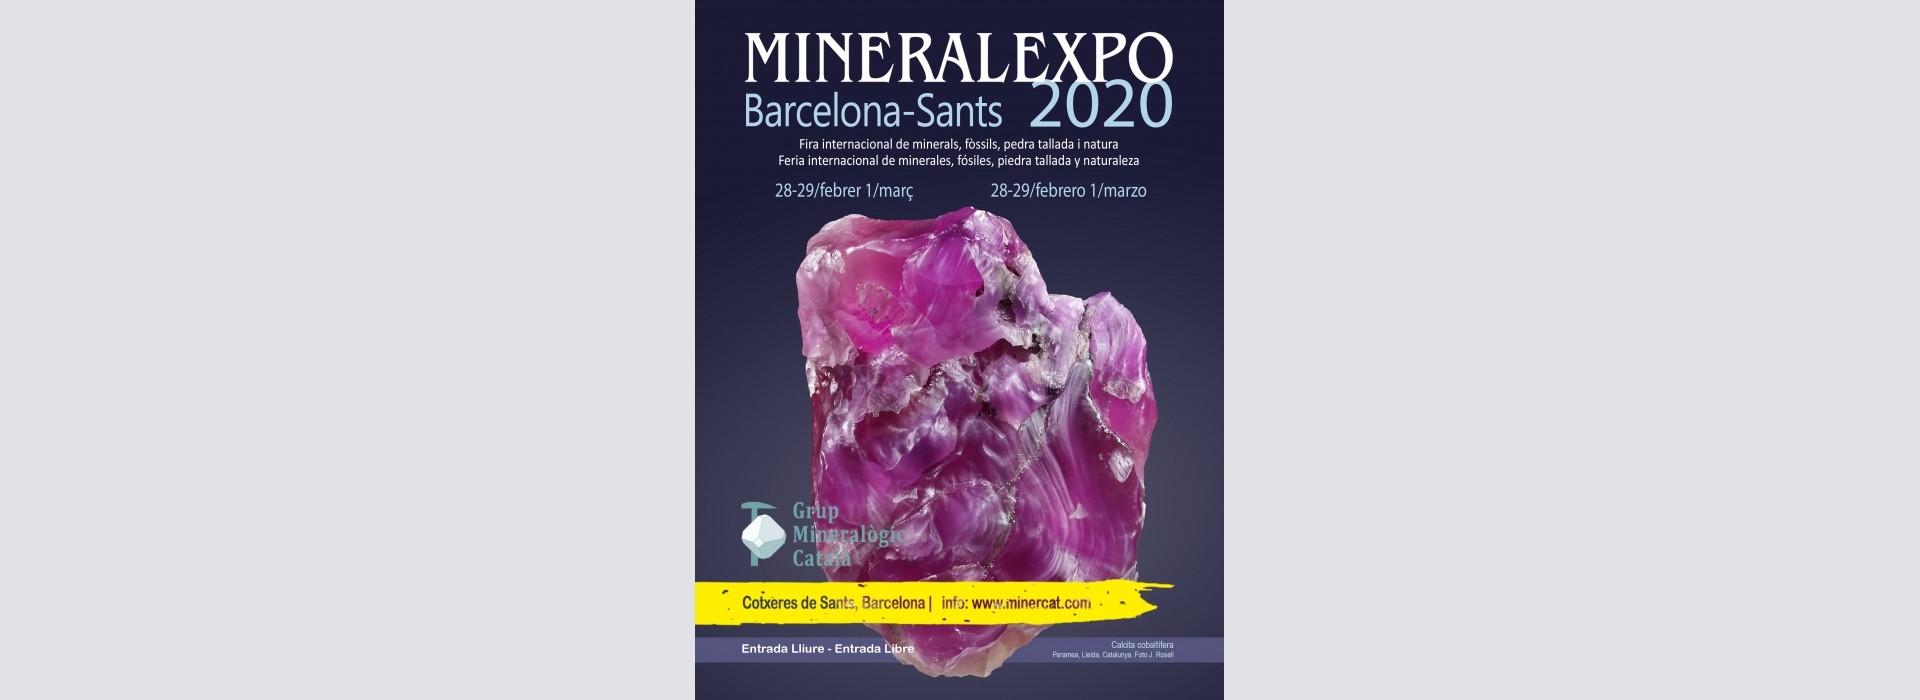 MineralExpo Barcelona-Sants 2020